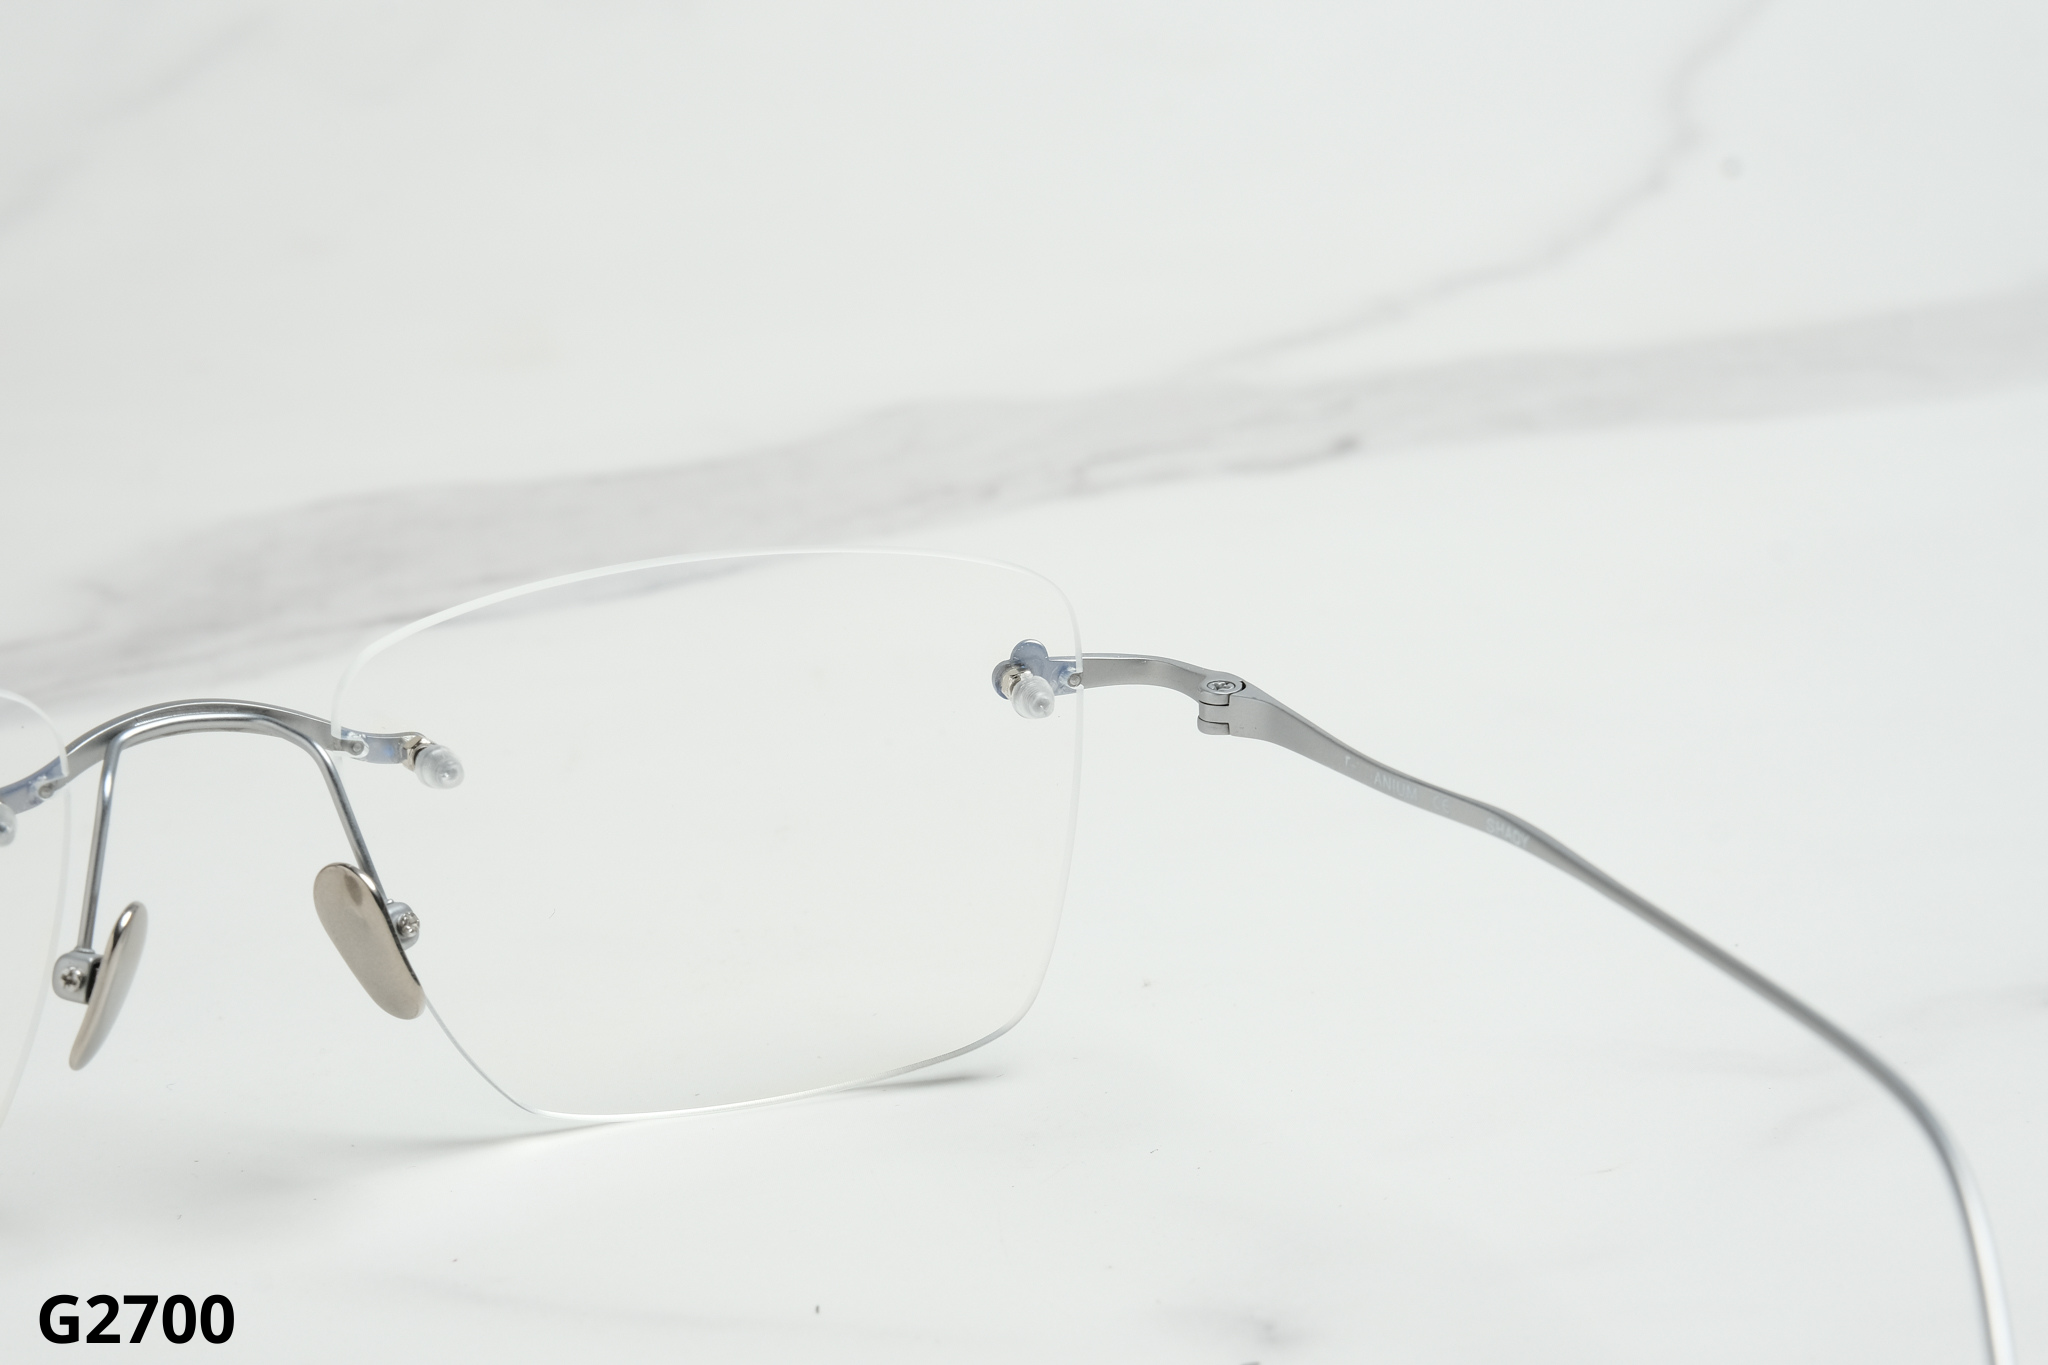  SHADY Eyewear - Glasses - G2700 